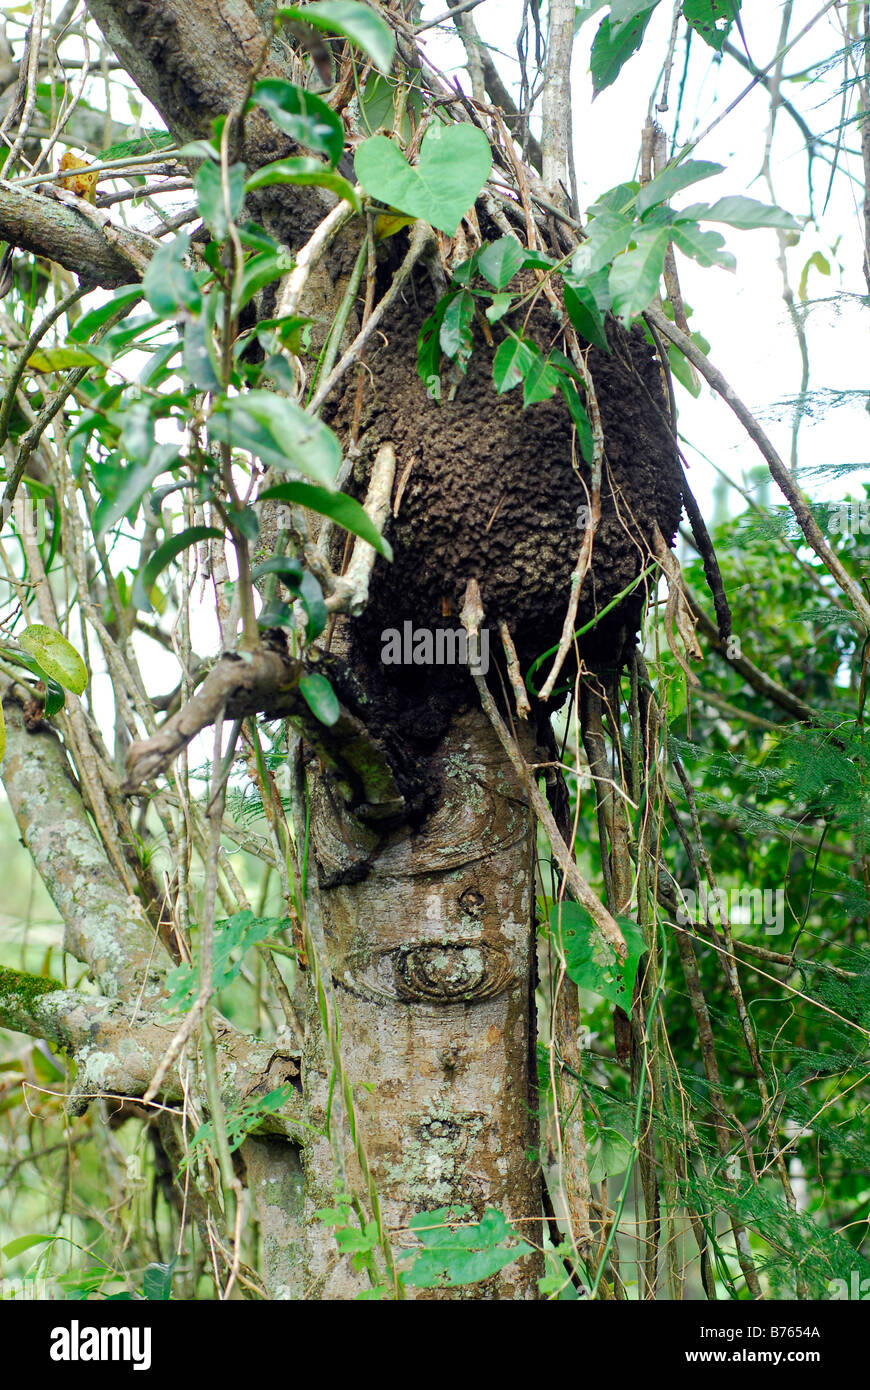 arboreal termite nest Stock Photo